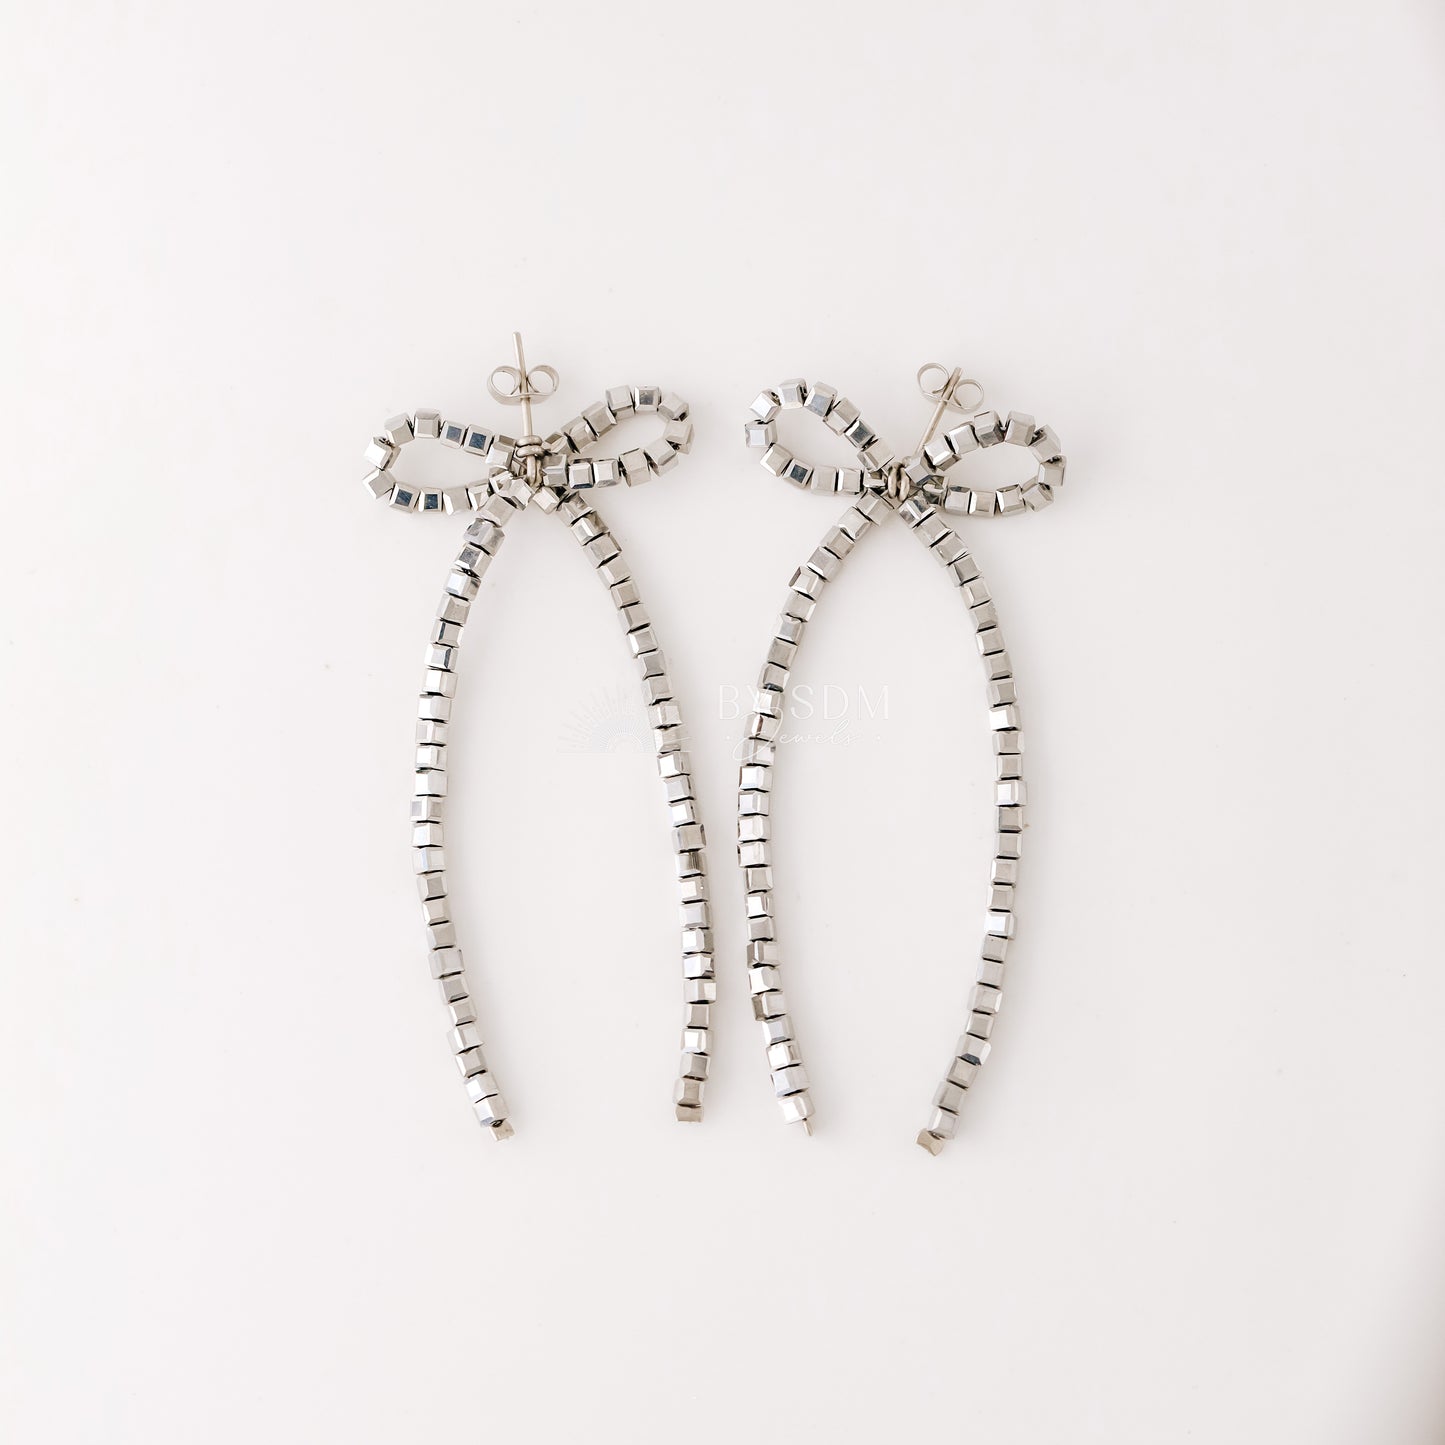 Ribbon Bow Stud Earrings in Stainless Steel, Silver or Gold, Dainty Earrings, Silver Bow Drop Earrings, Bow Jewelry, Bridesmaid's Jewellery